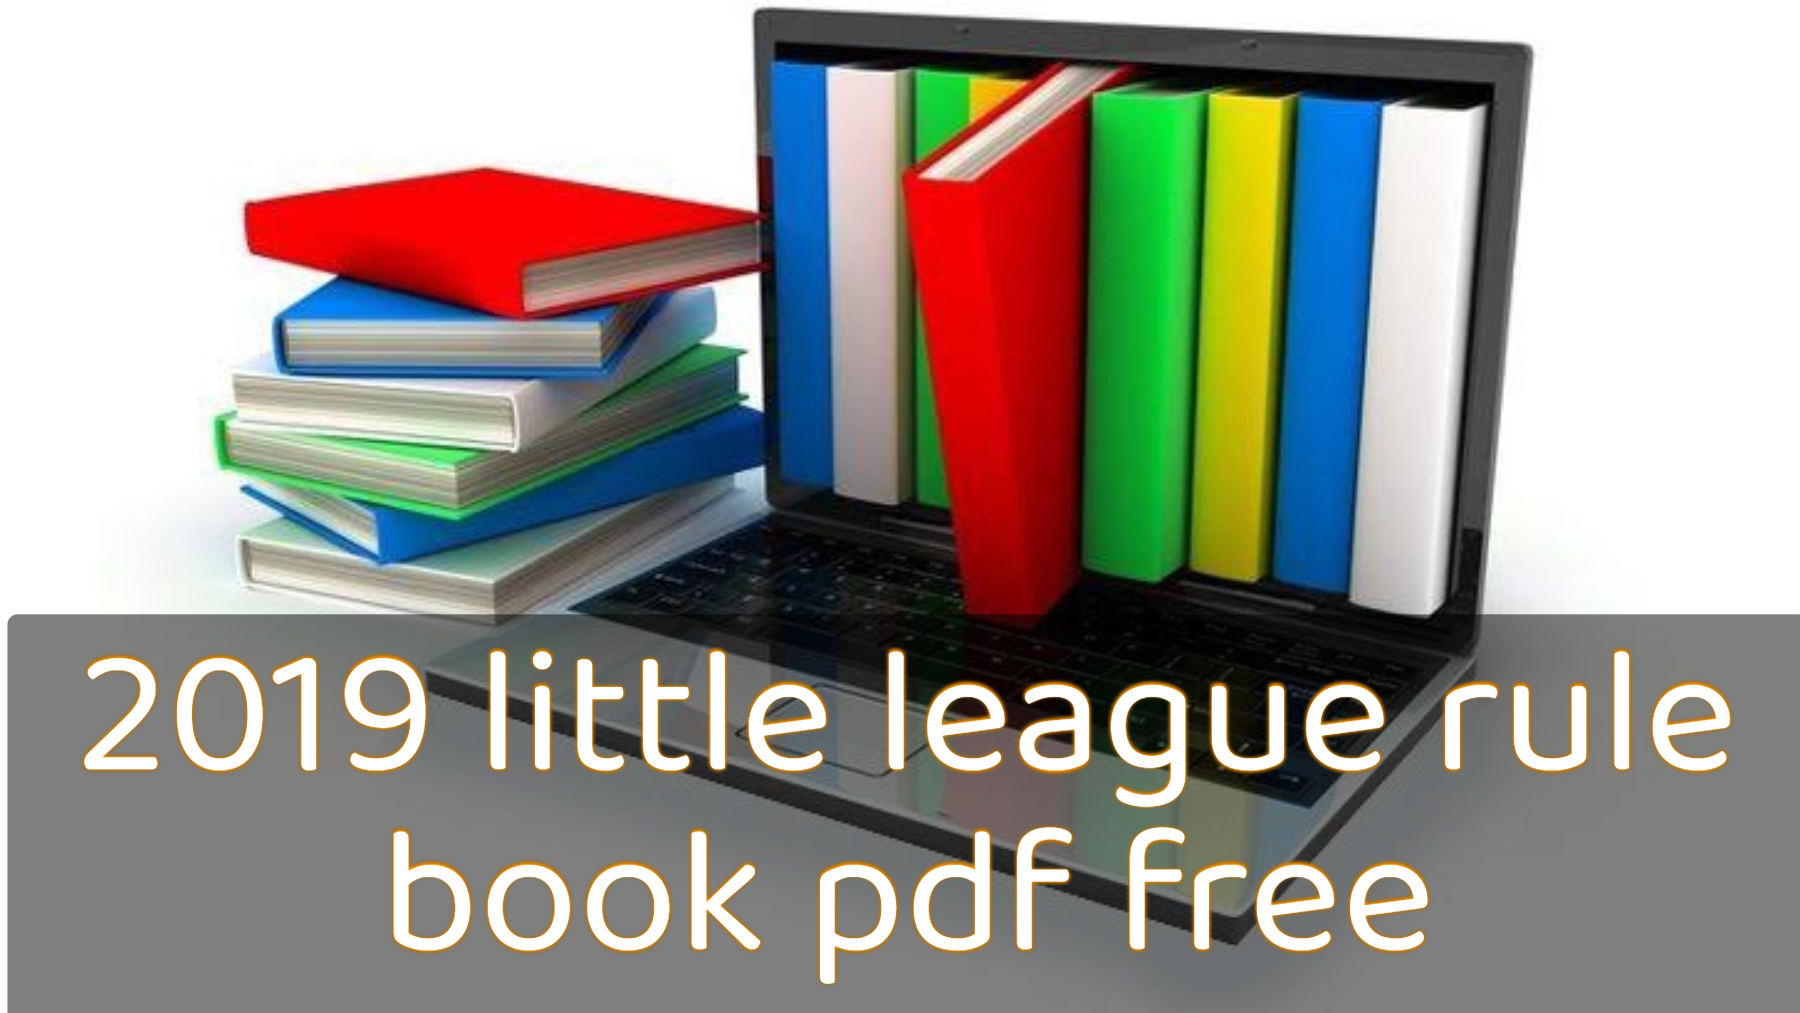 2019 little league rule book pdf free, Little league rule book pdf free, 2019 little league rule book pdf download, Little league rule book pdf free download